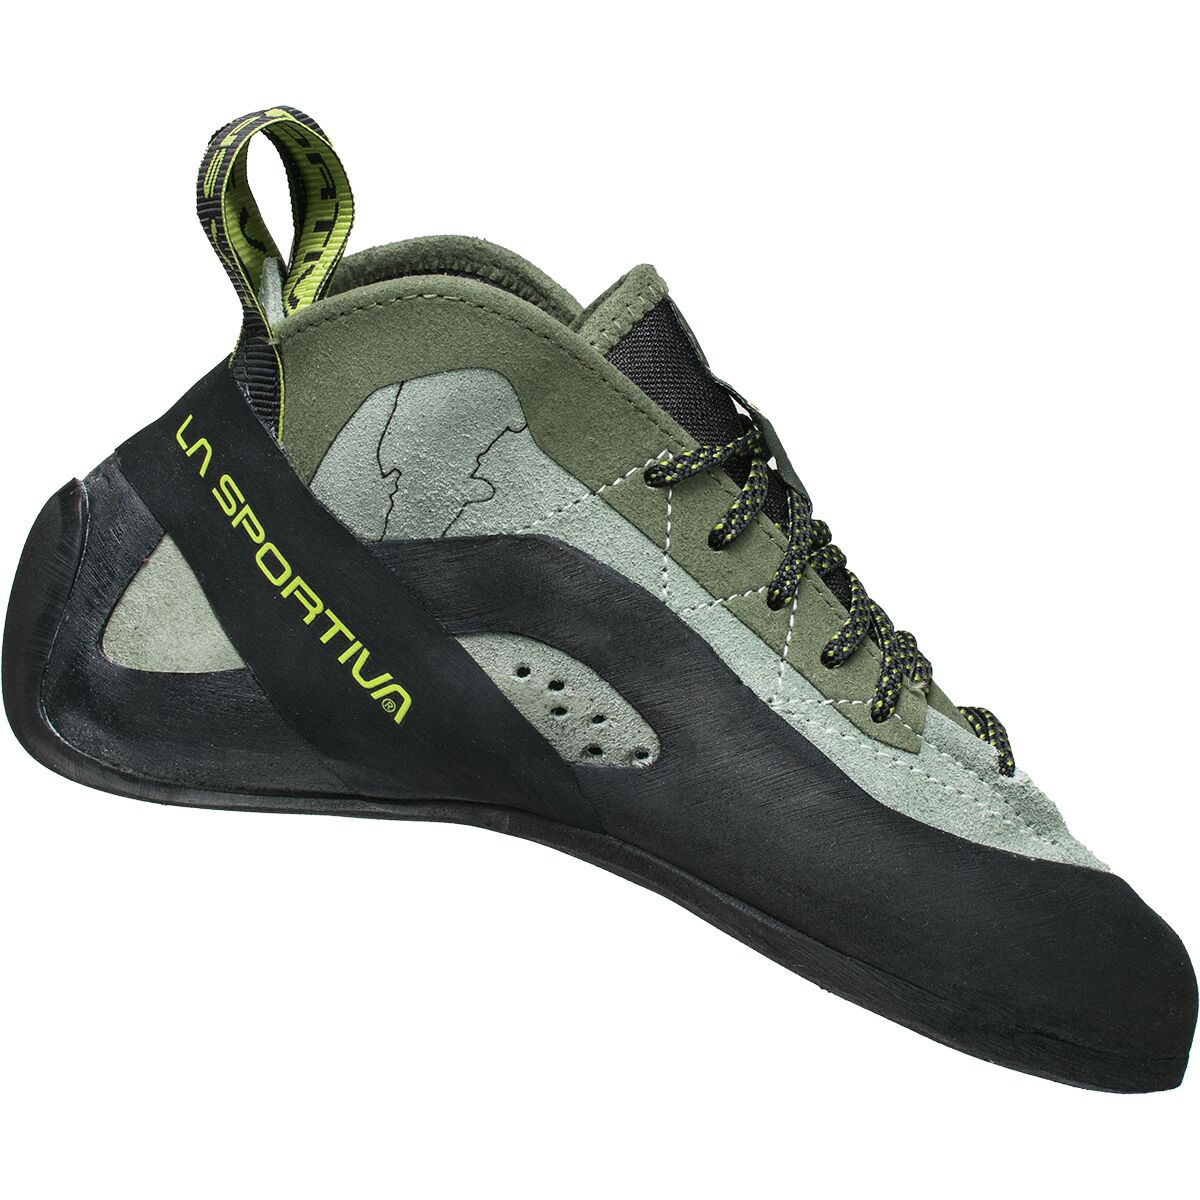 La Sportiva TC Pro Climbing Shoe